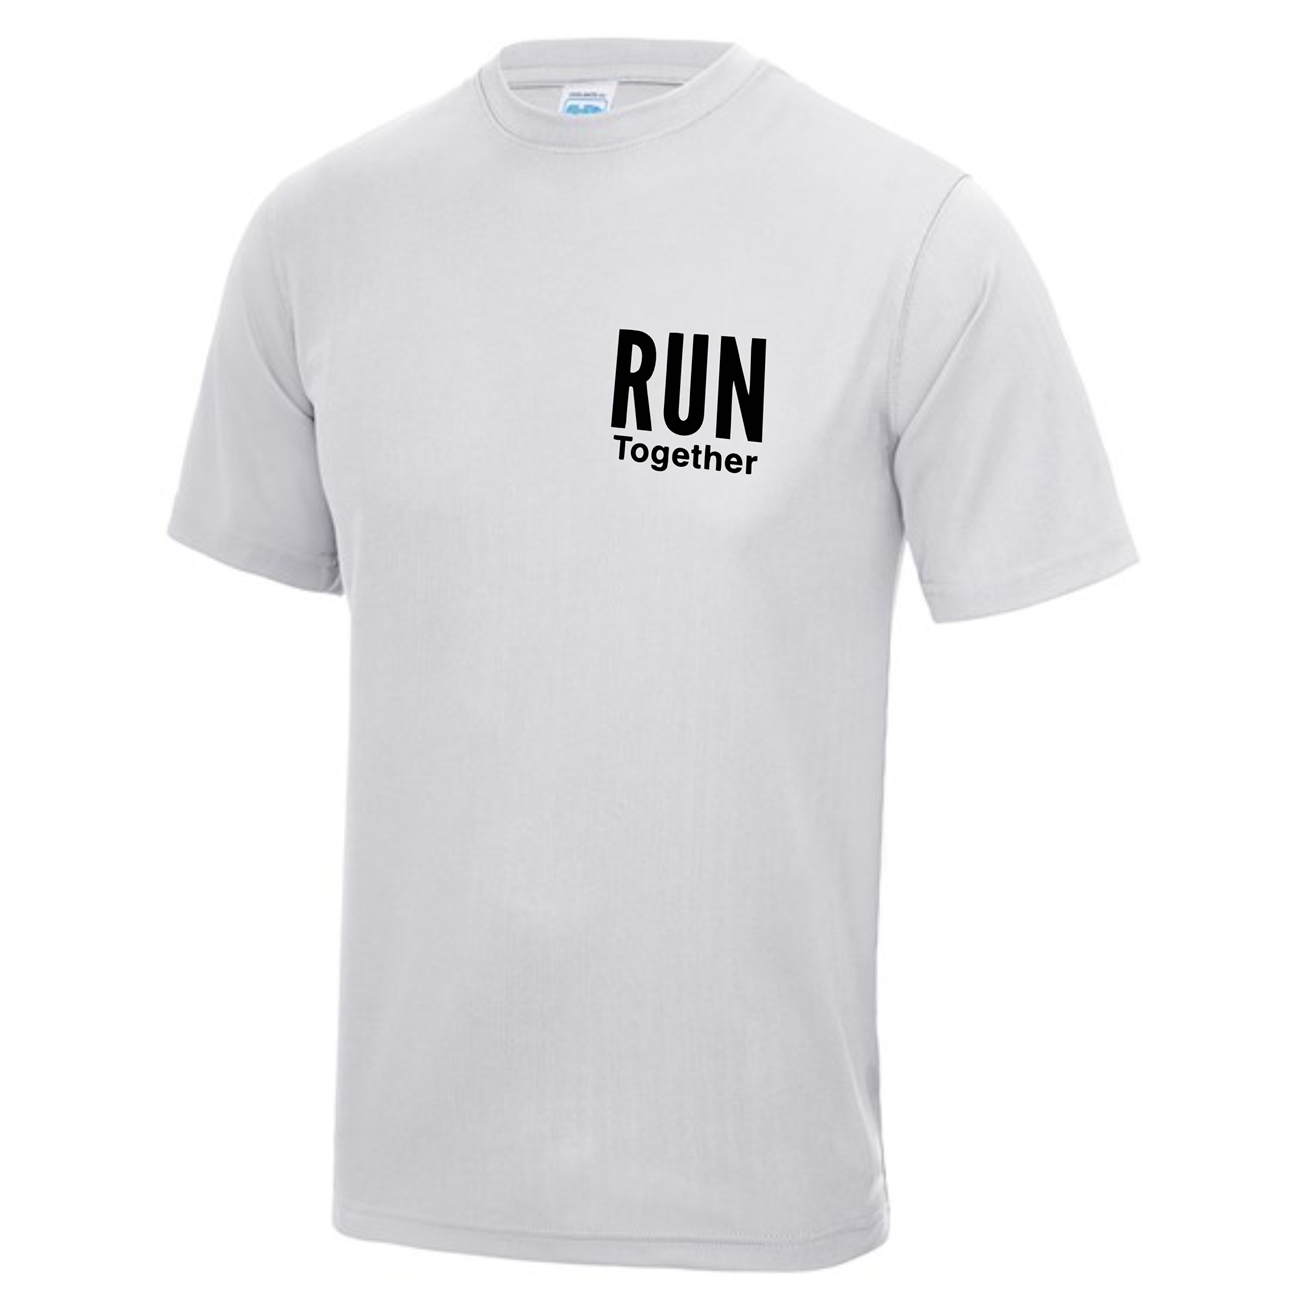 Run Together Mens/Unisex T-Shirt